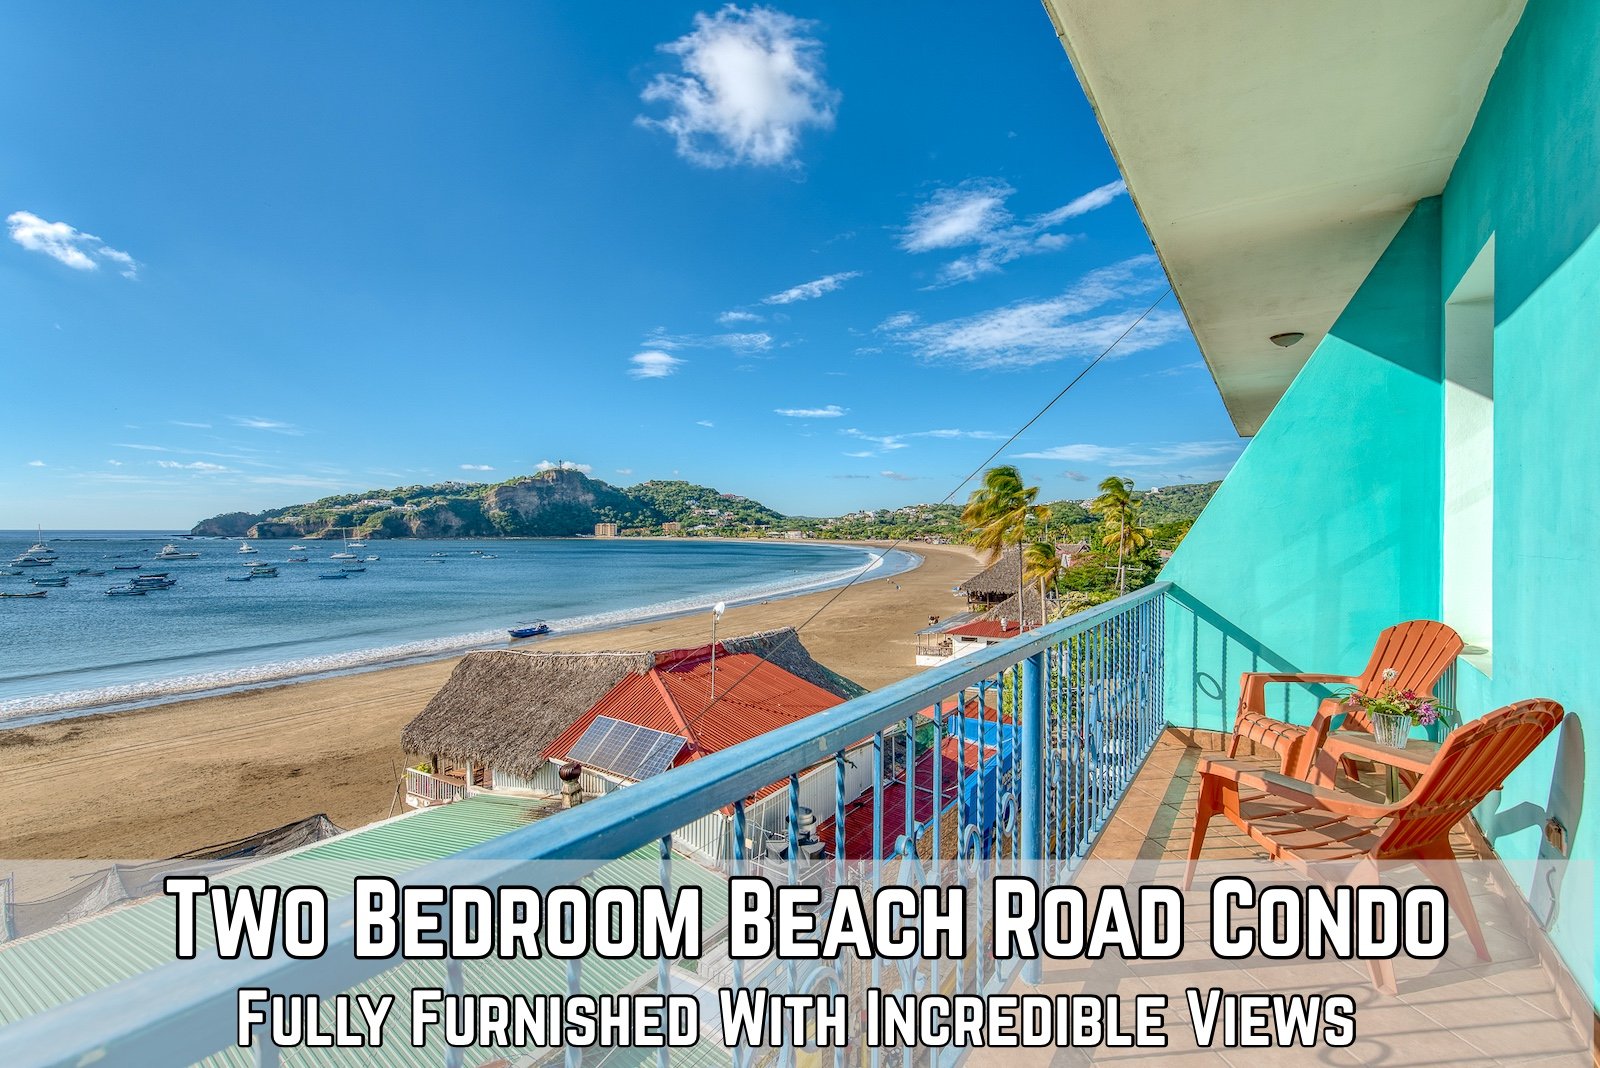 Beachfront Condo For sale Sane Juan Del Sur Nicaragua 1.jpg